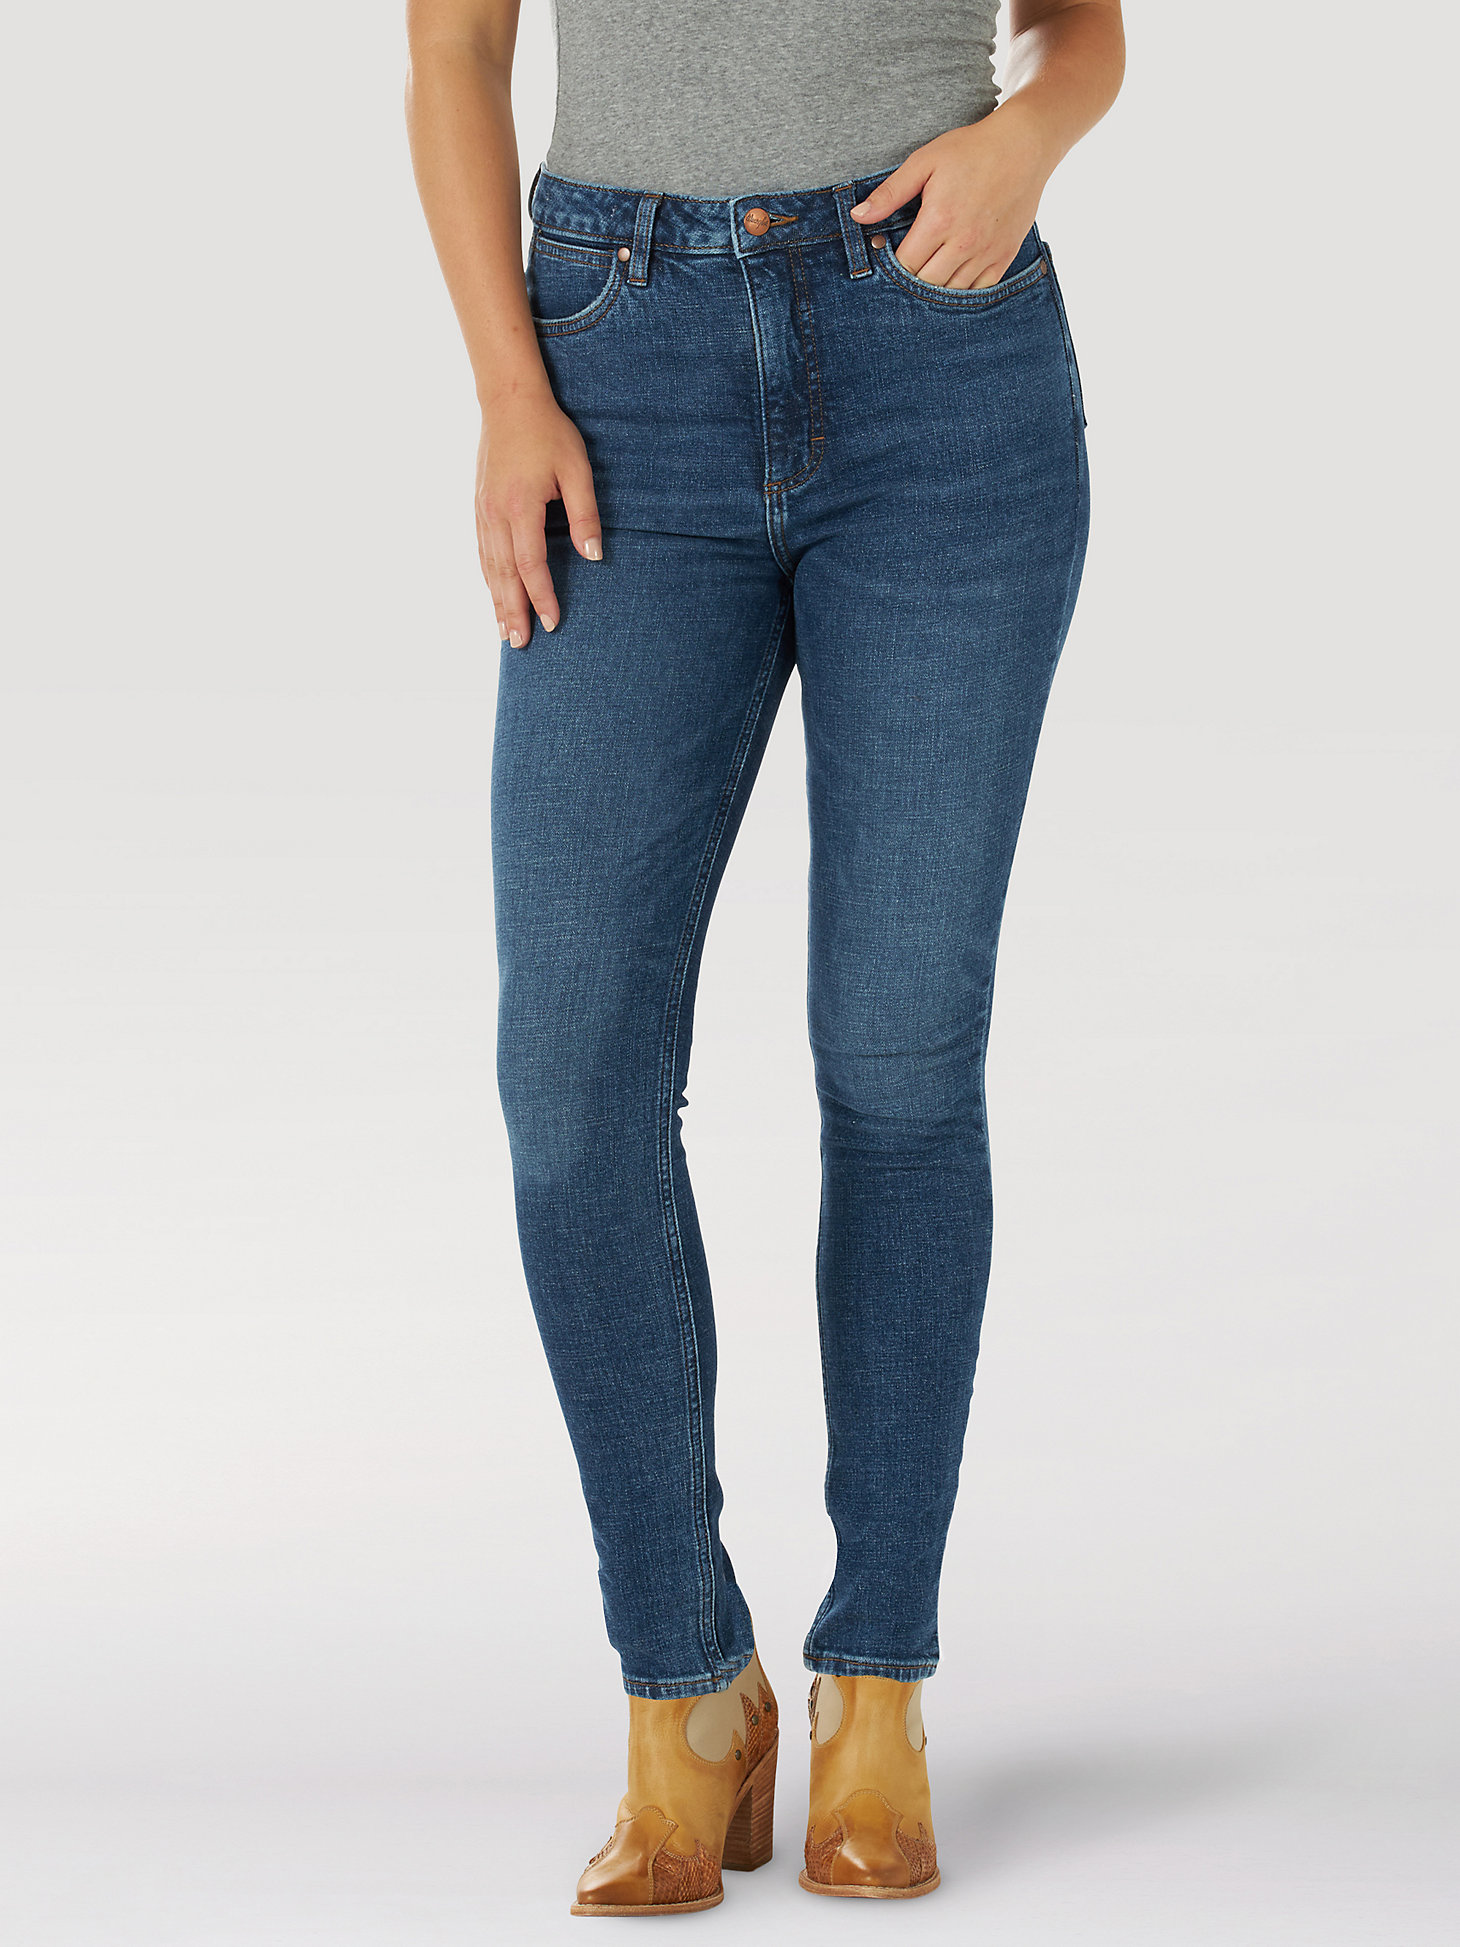 Wrangler Retro® Premium Jean: Women's High Rise Skinny in Annie main view